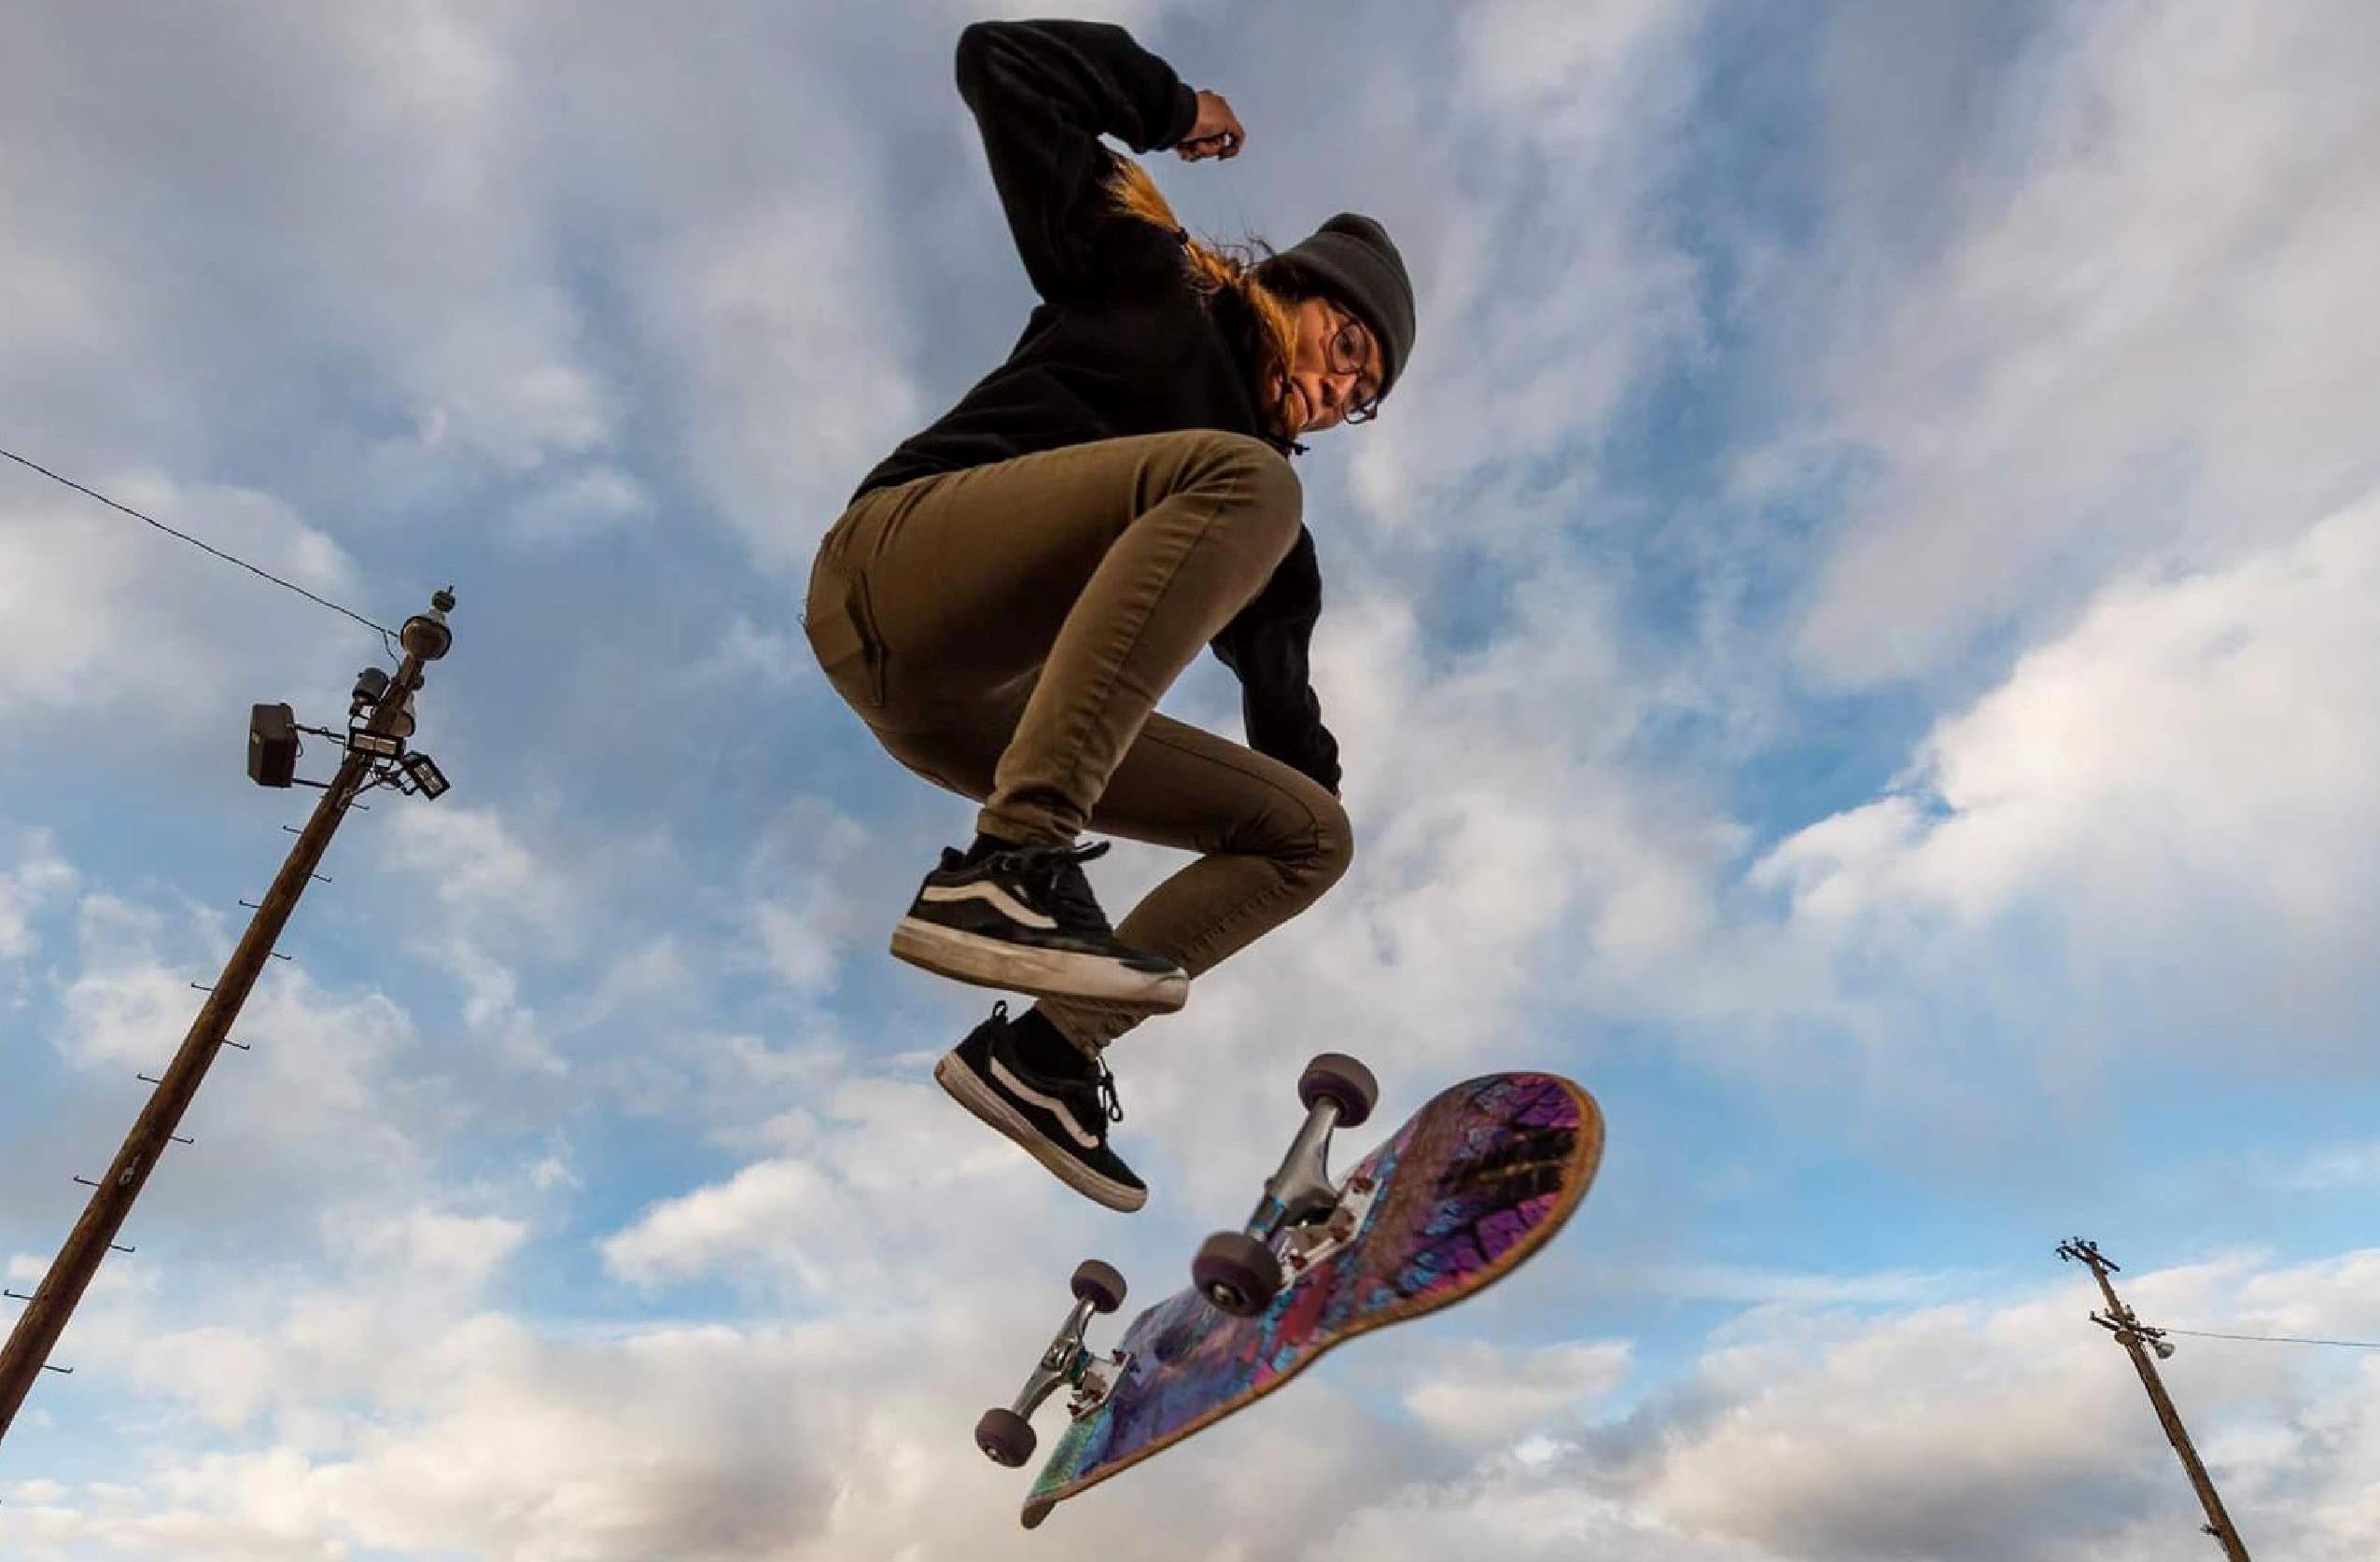 Mental Health & Diversity in Skateboarding | Tony Hawk Foundation